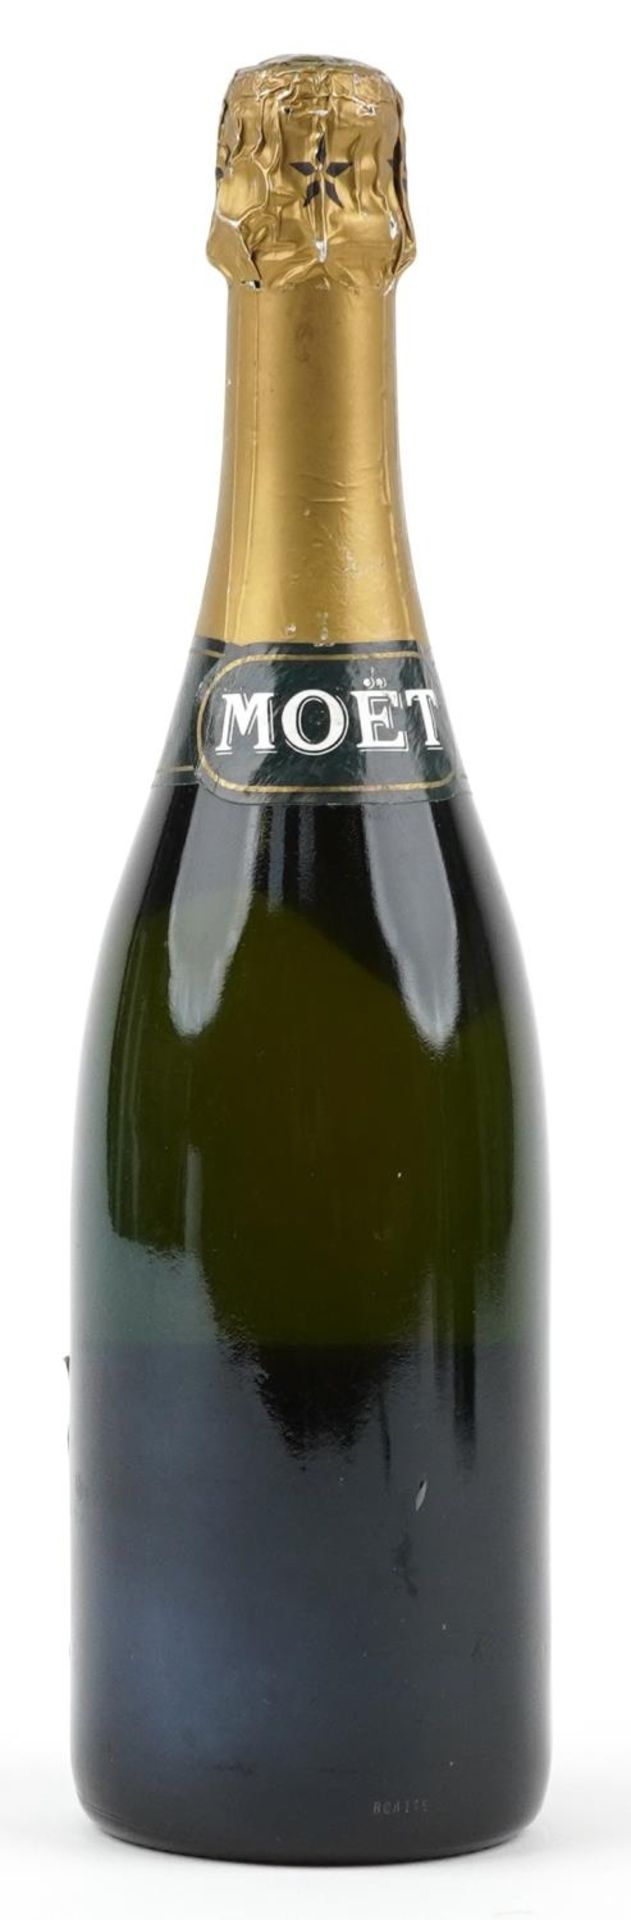 Bottle of Moet & Chandon 1983 Champagne - Image 2 of 2